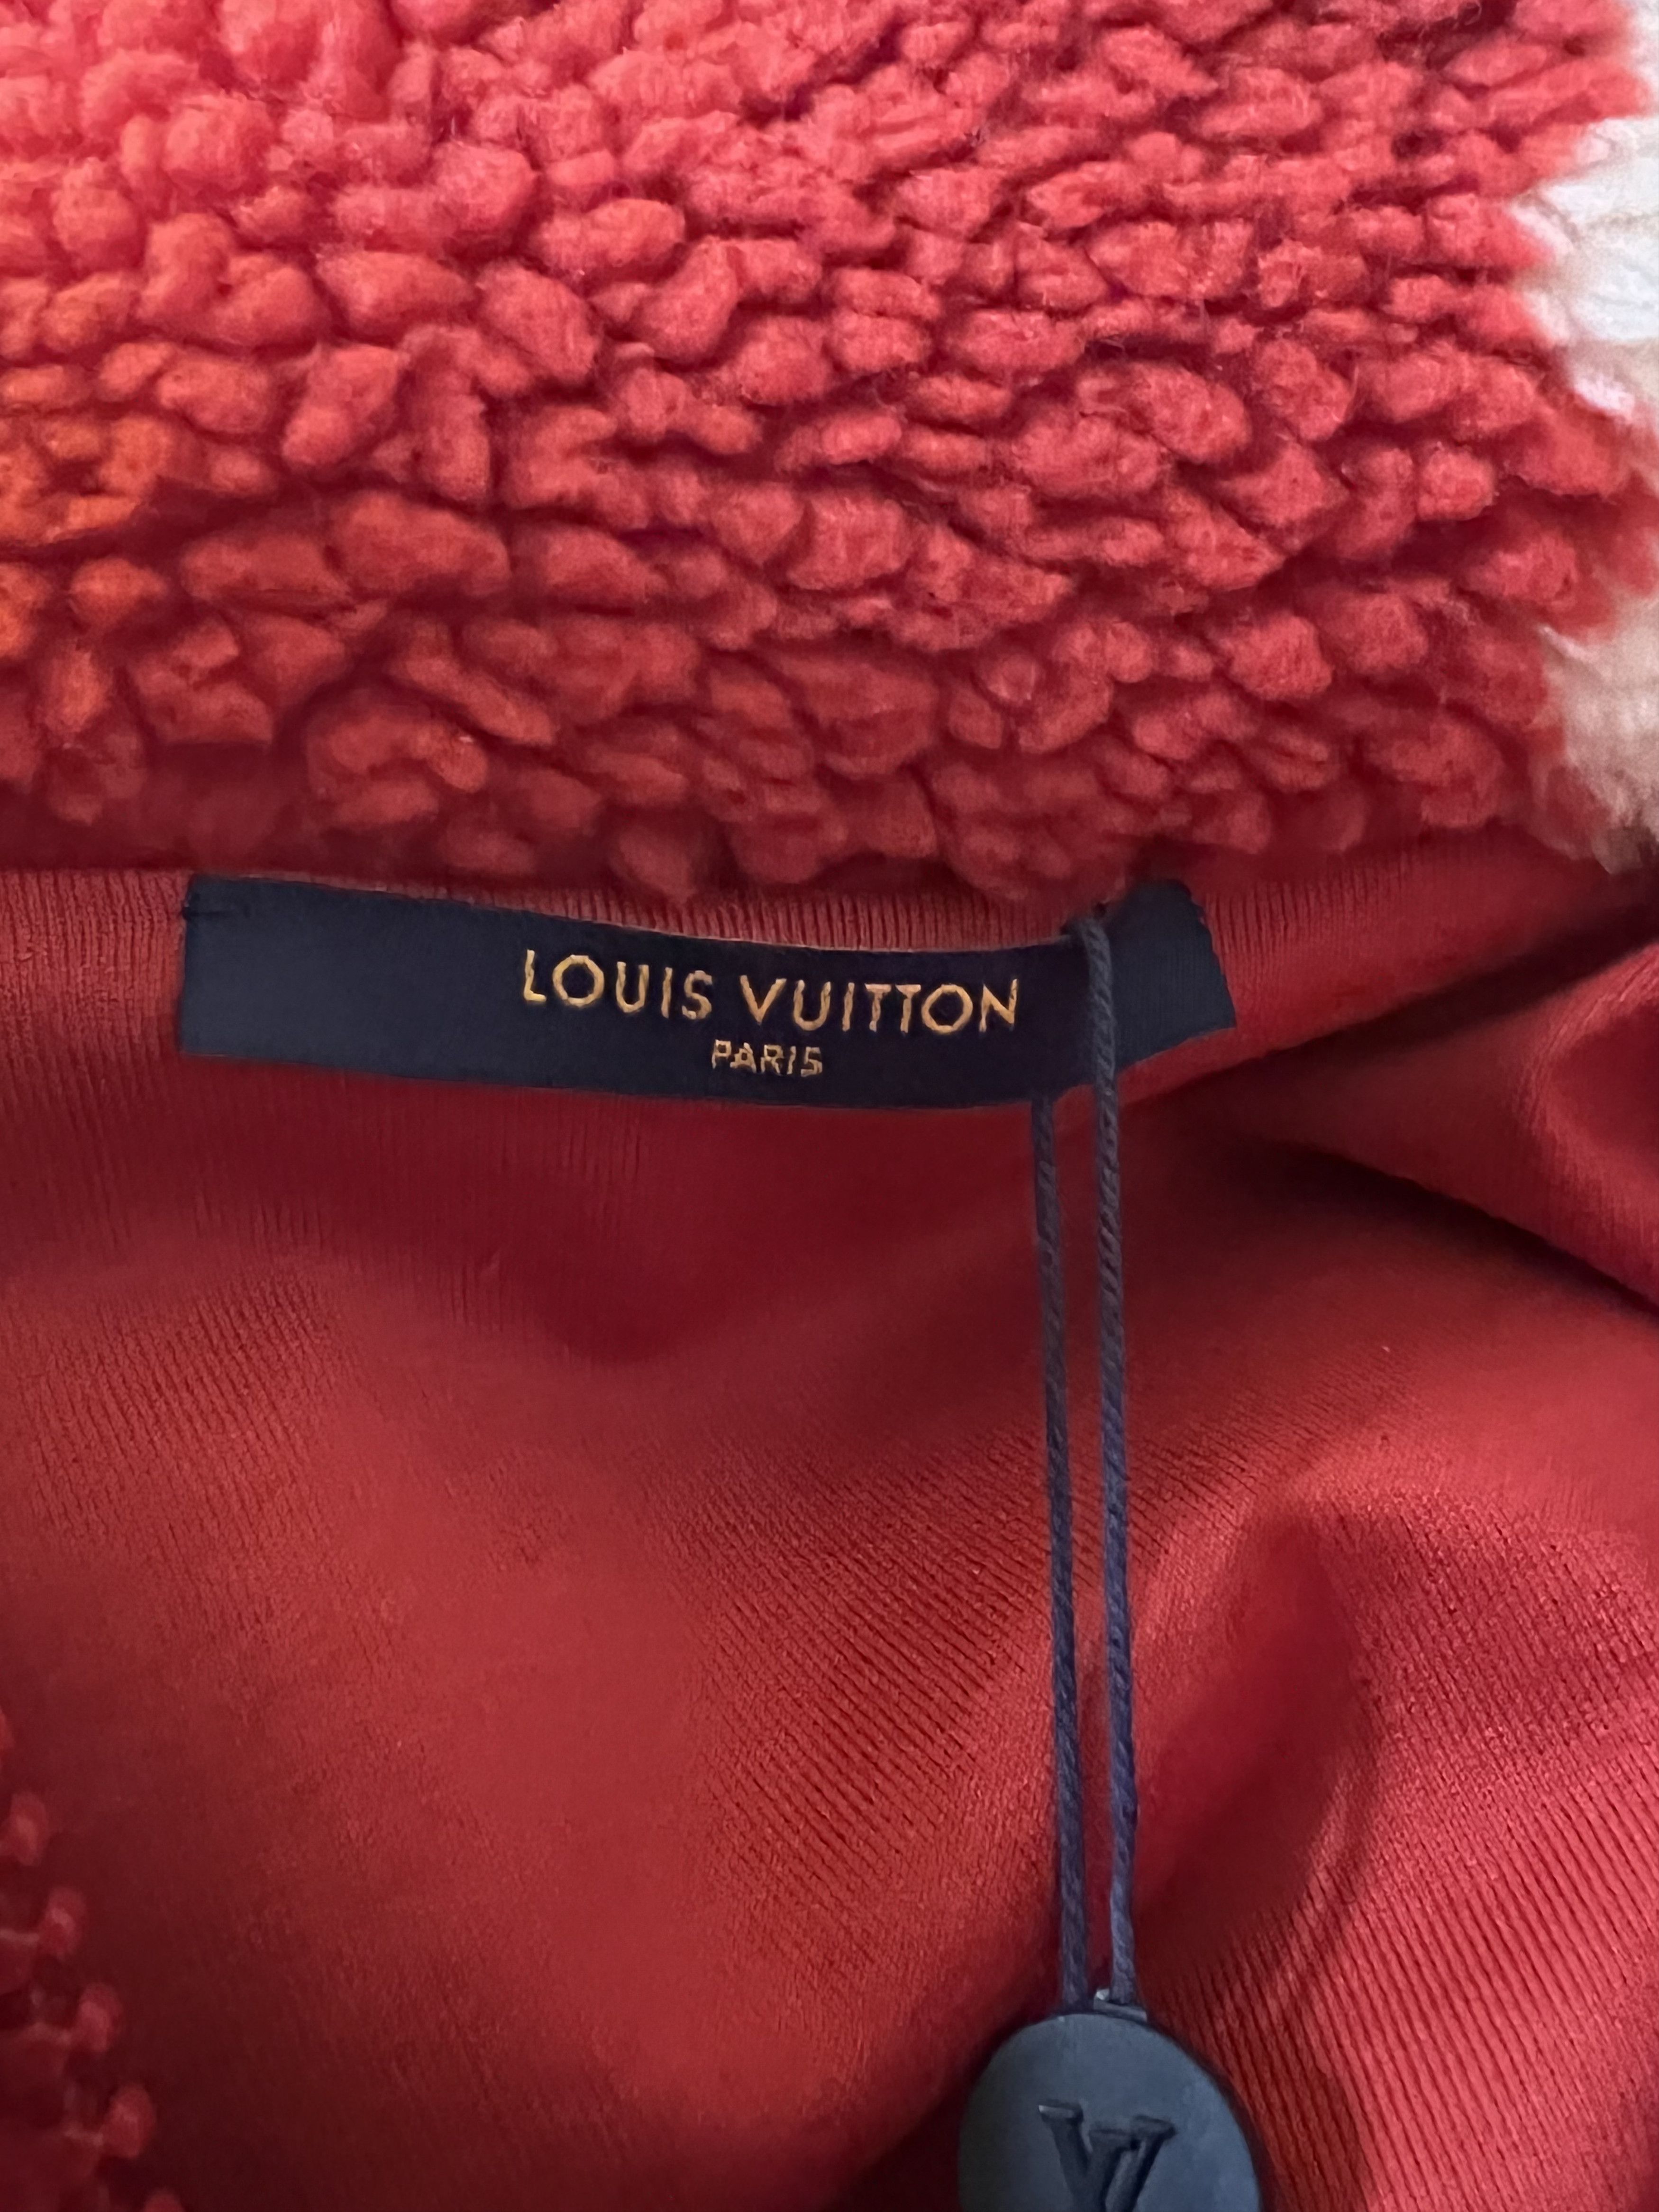 Louis Vuitton Louis Vuitton Nigo Red Checkered Fleece Jacket Size US M / EU 48-50 / 2 - 6 Thumbnail